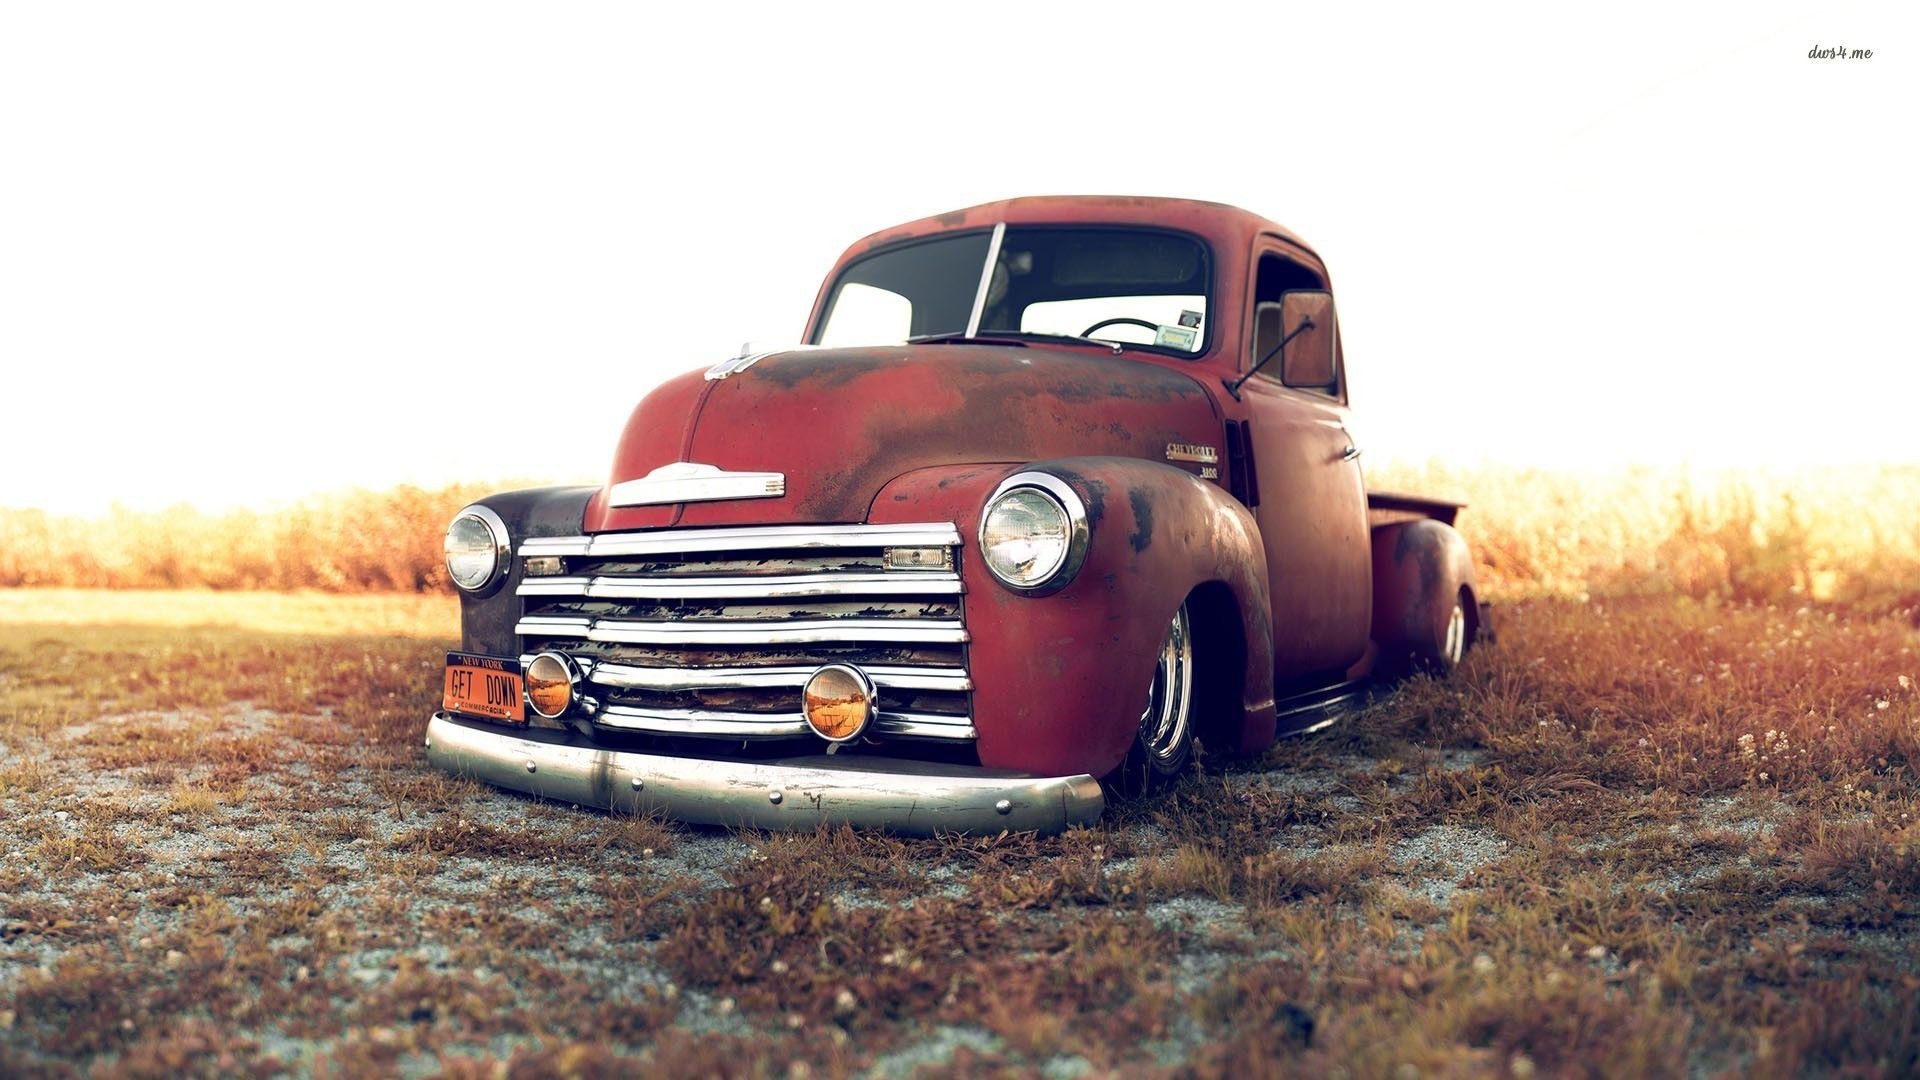 Chevrolet pickup truck wallpaper - Car wallpapers - #16886